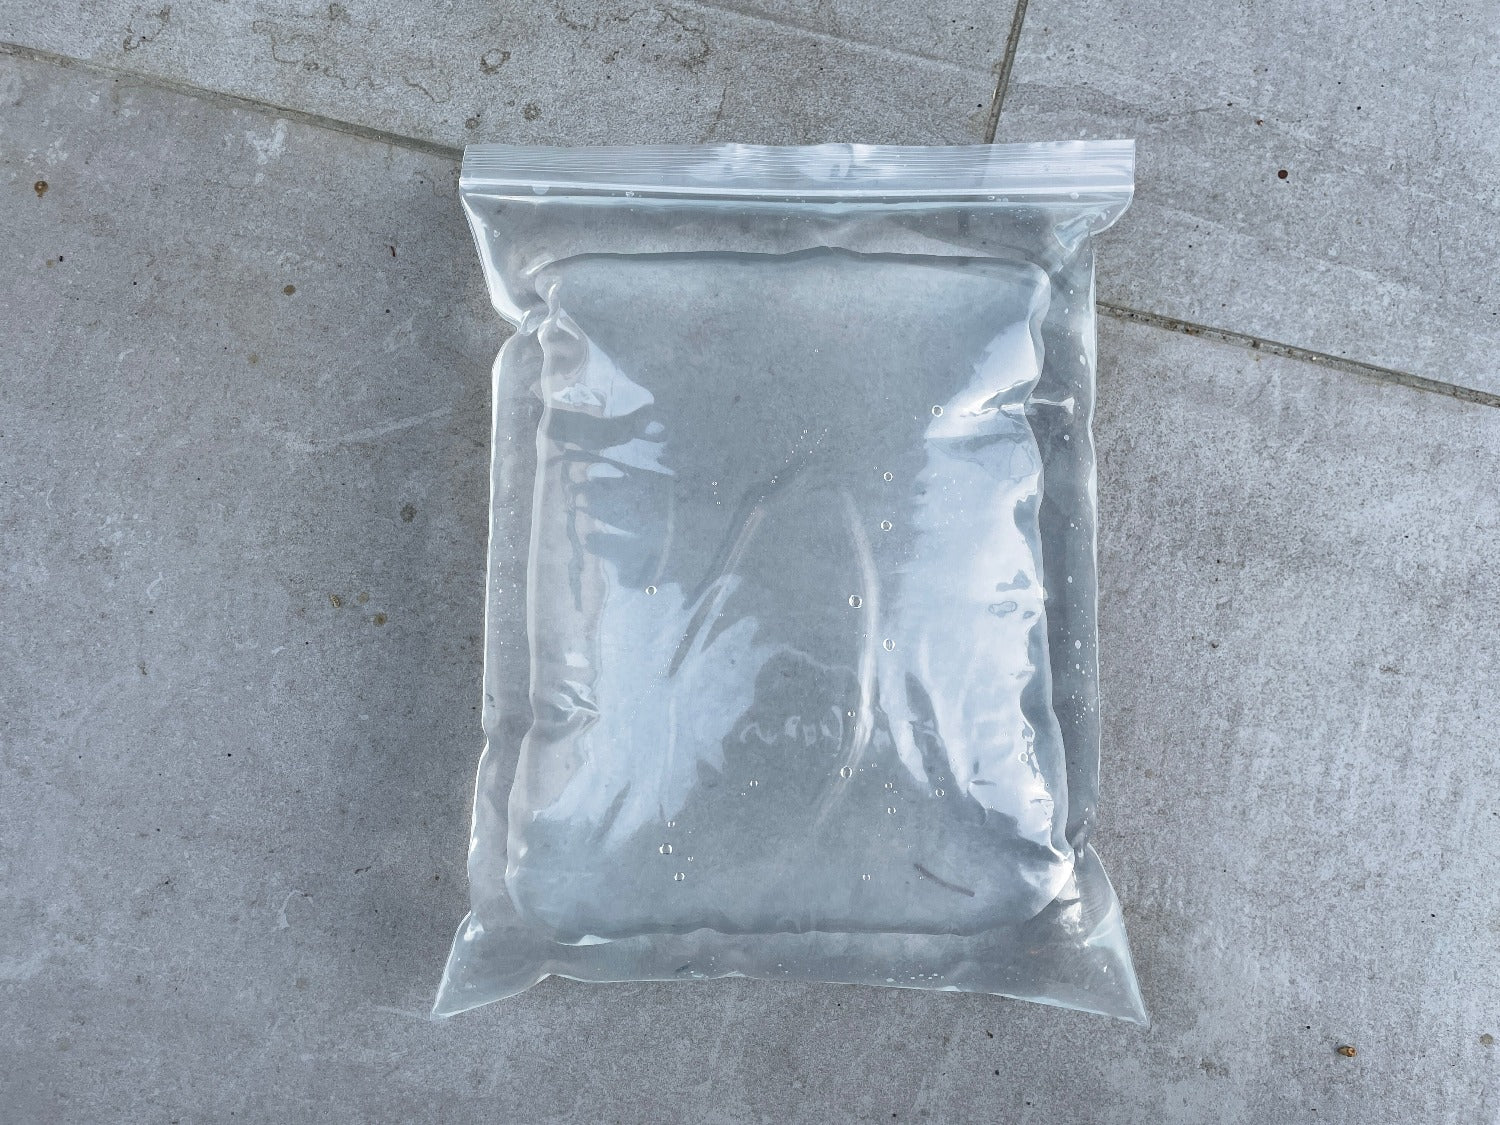 Clear Ziploc Bag